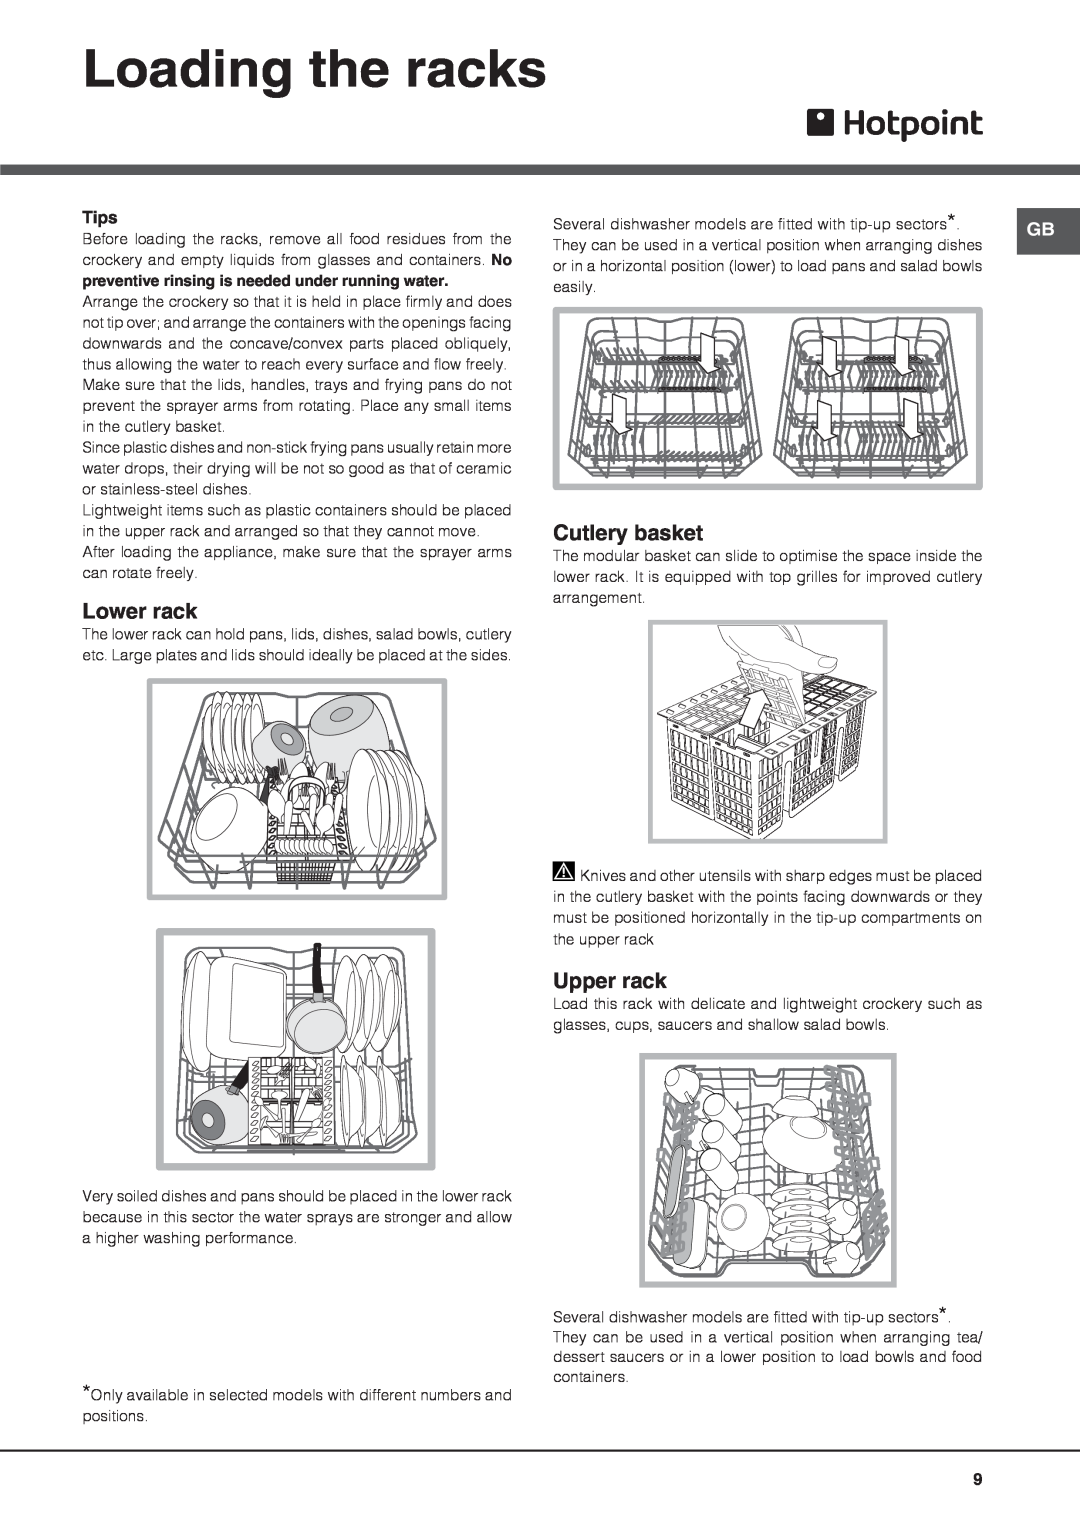 Hotpoint FDFET 33121 manual Loading the racks, Lower rack, Cutlery basket, Upper rack, Tips 